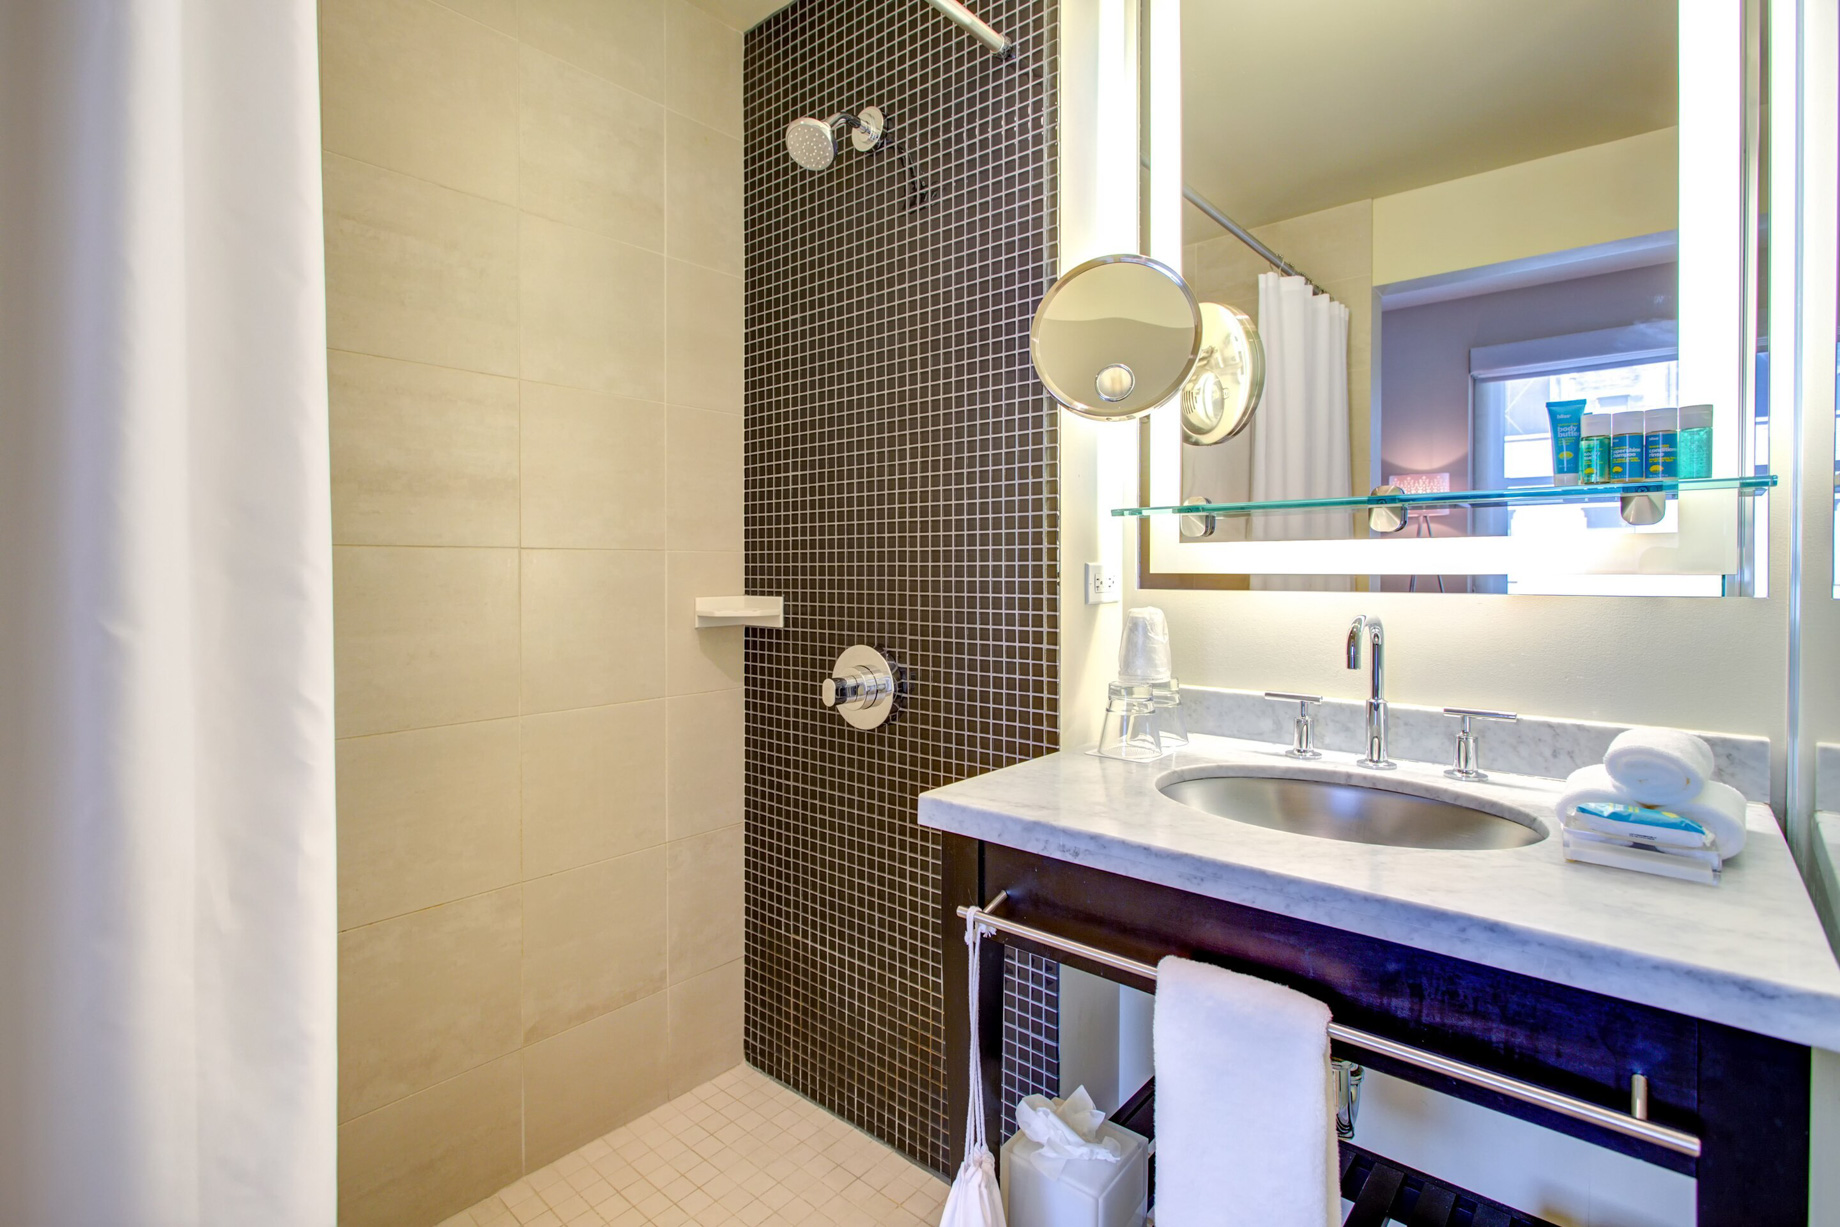 W Chicago City Center Hotel – Chicago, IL, USA – Mega Bathroom Shower